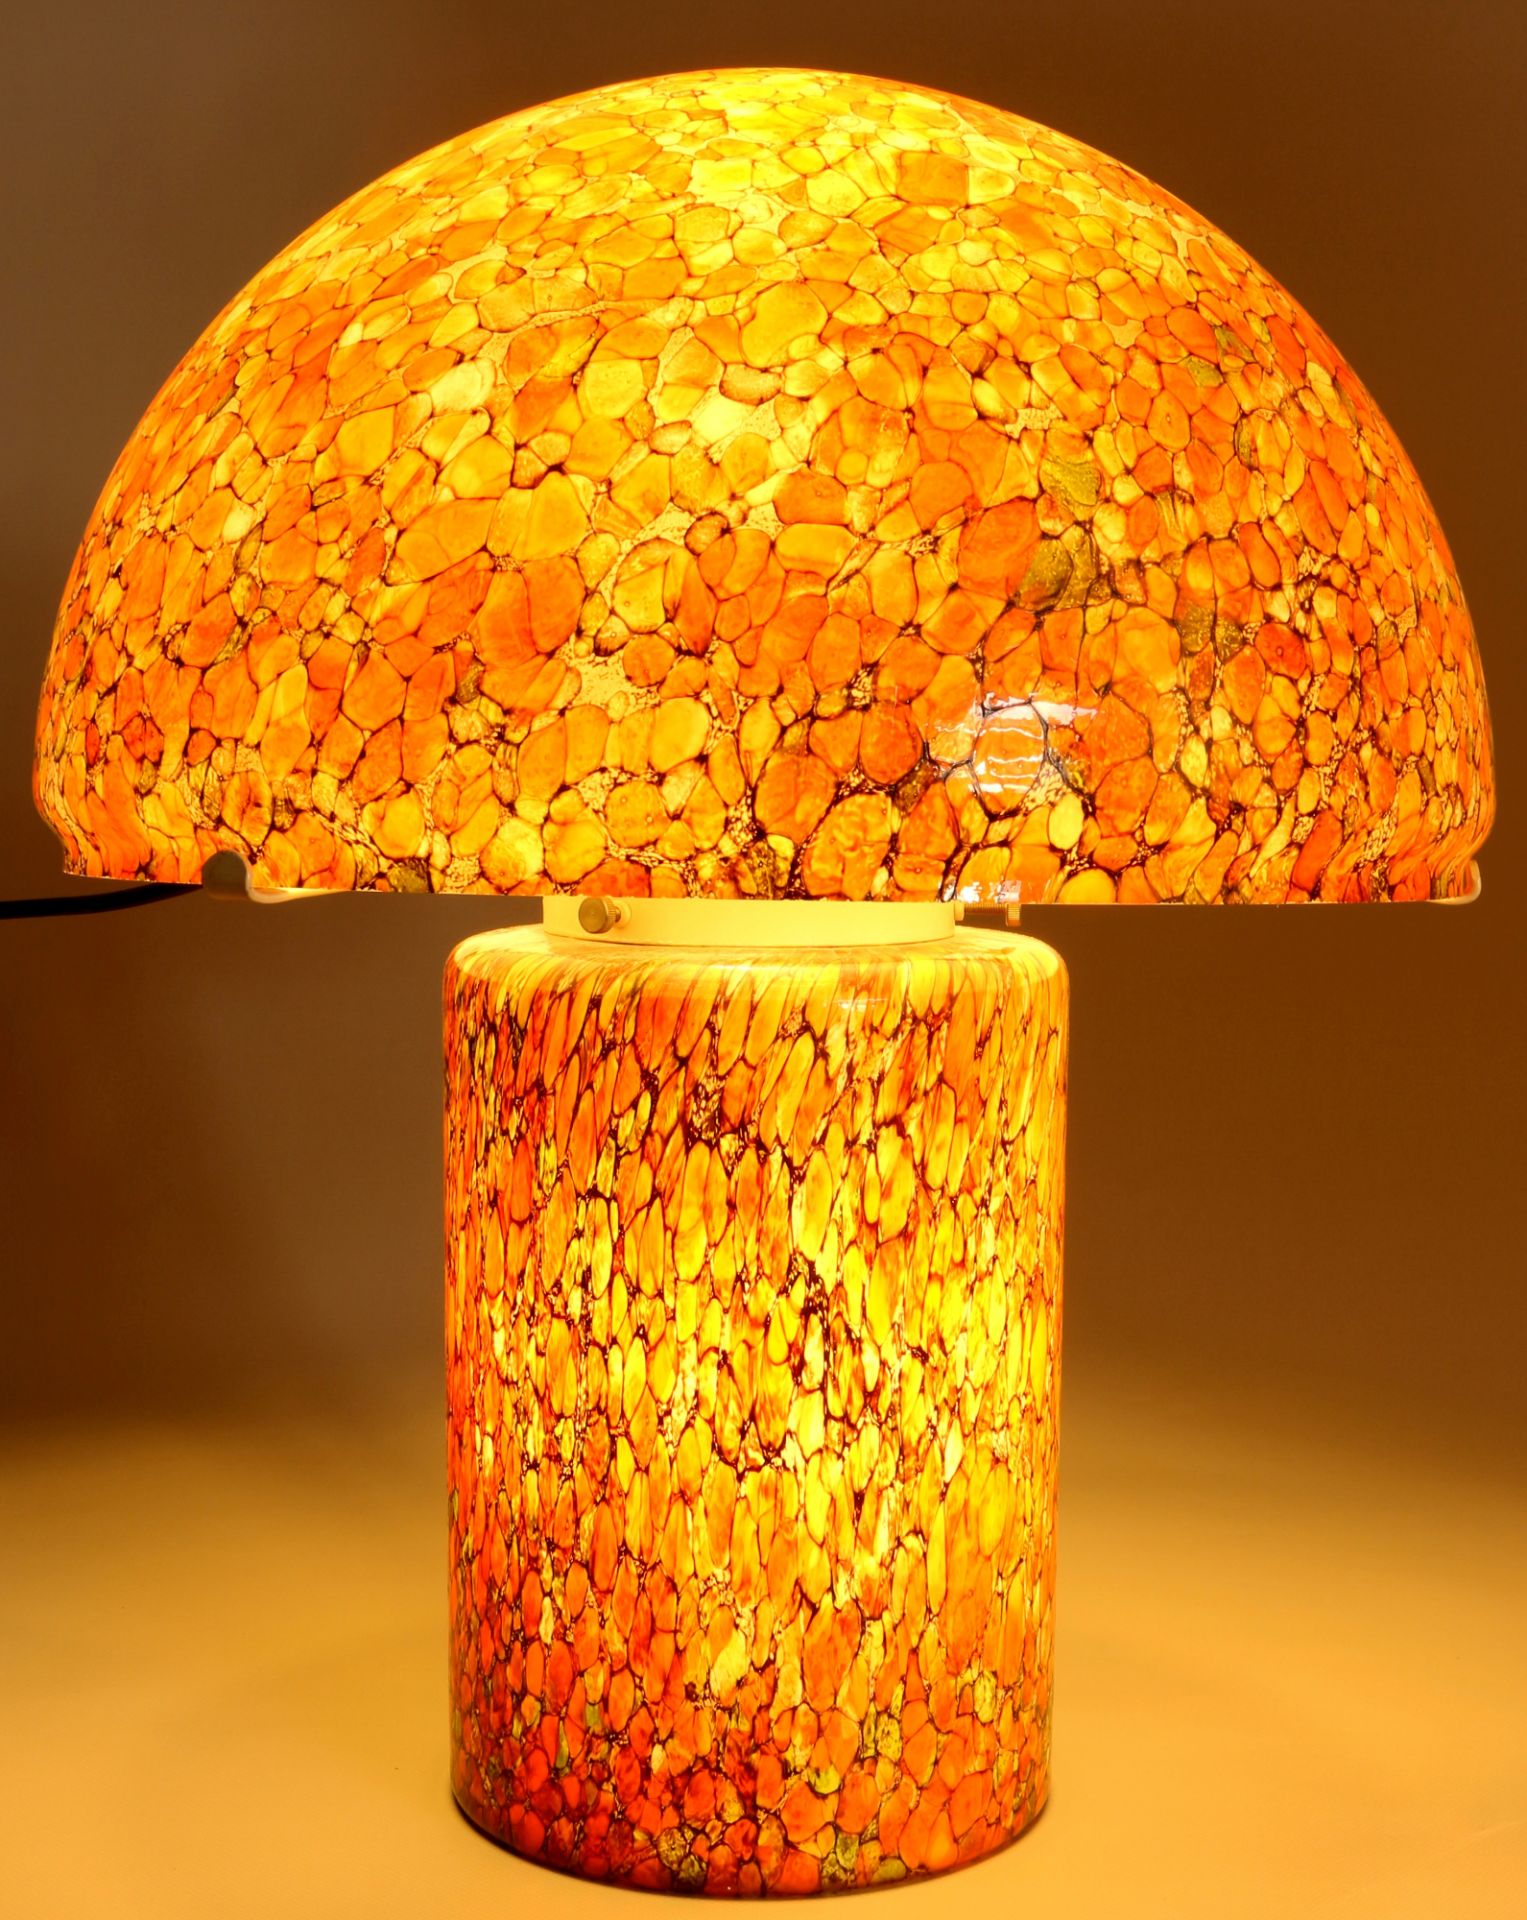 Peill & Putzler Pilz-Tischlampe 1970er Jahre, vintage mushroom table lamp 70s design,